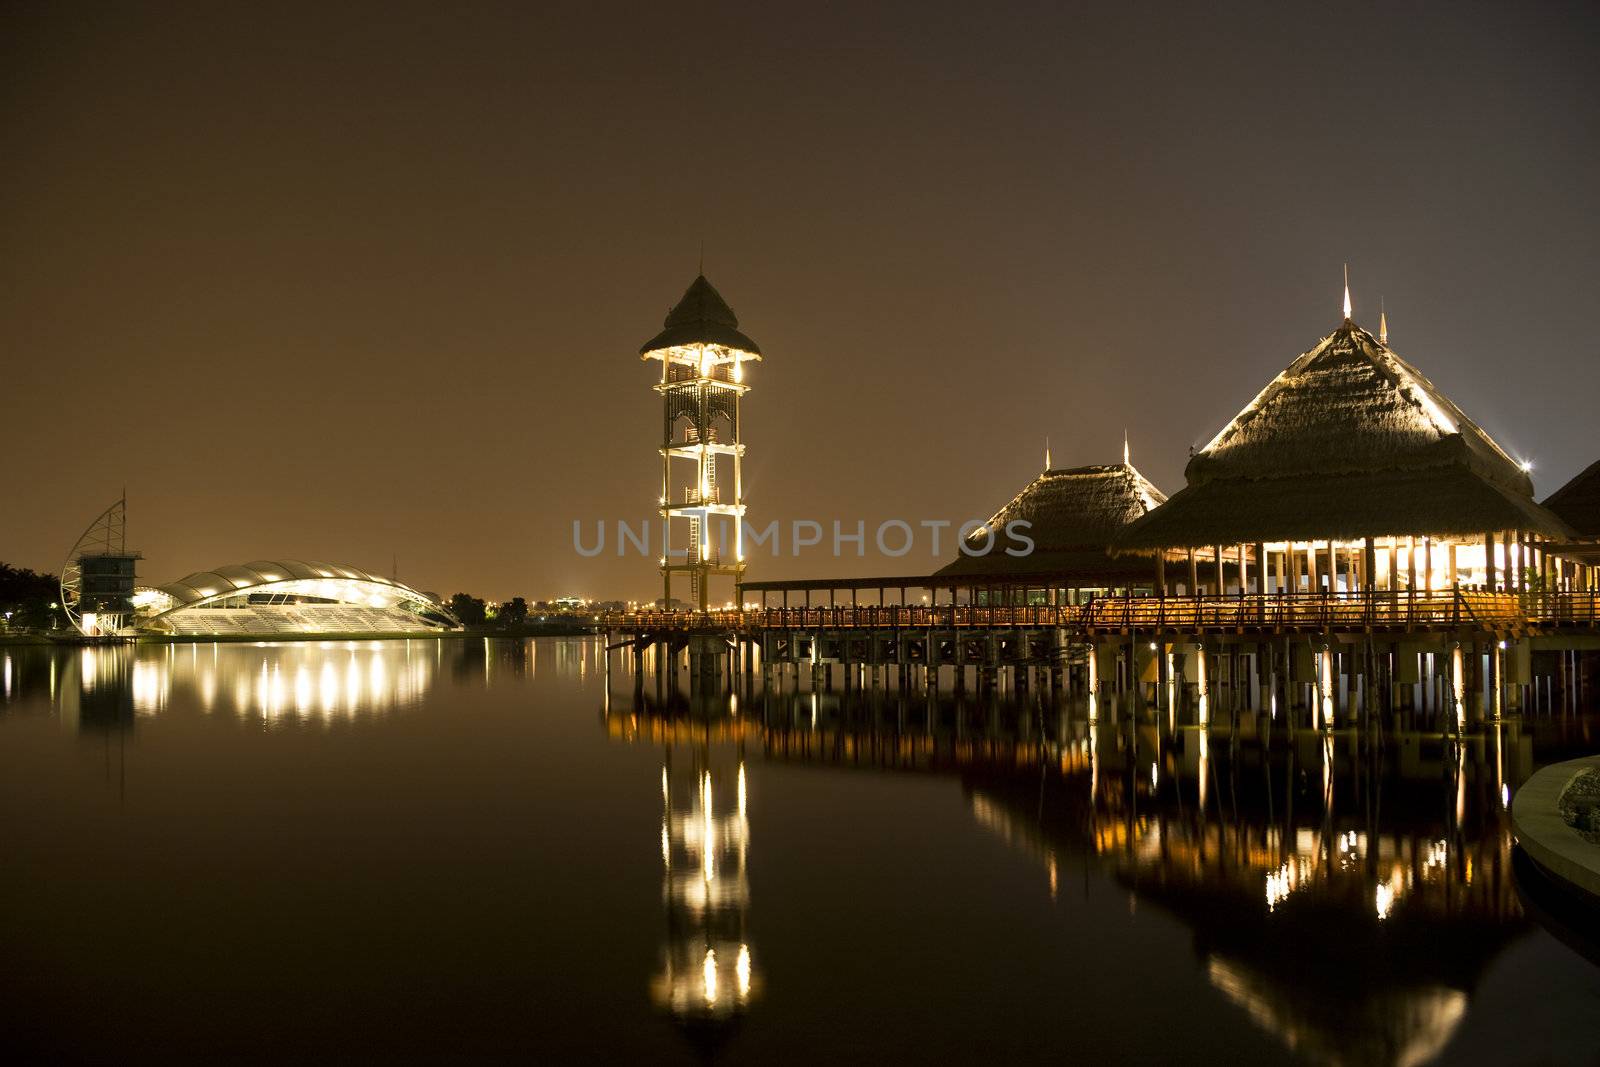 Night image of the lakeside at Putrajaya, Malaysia.